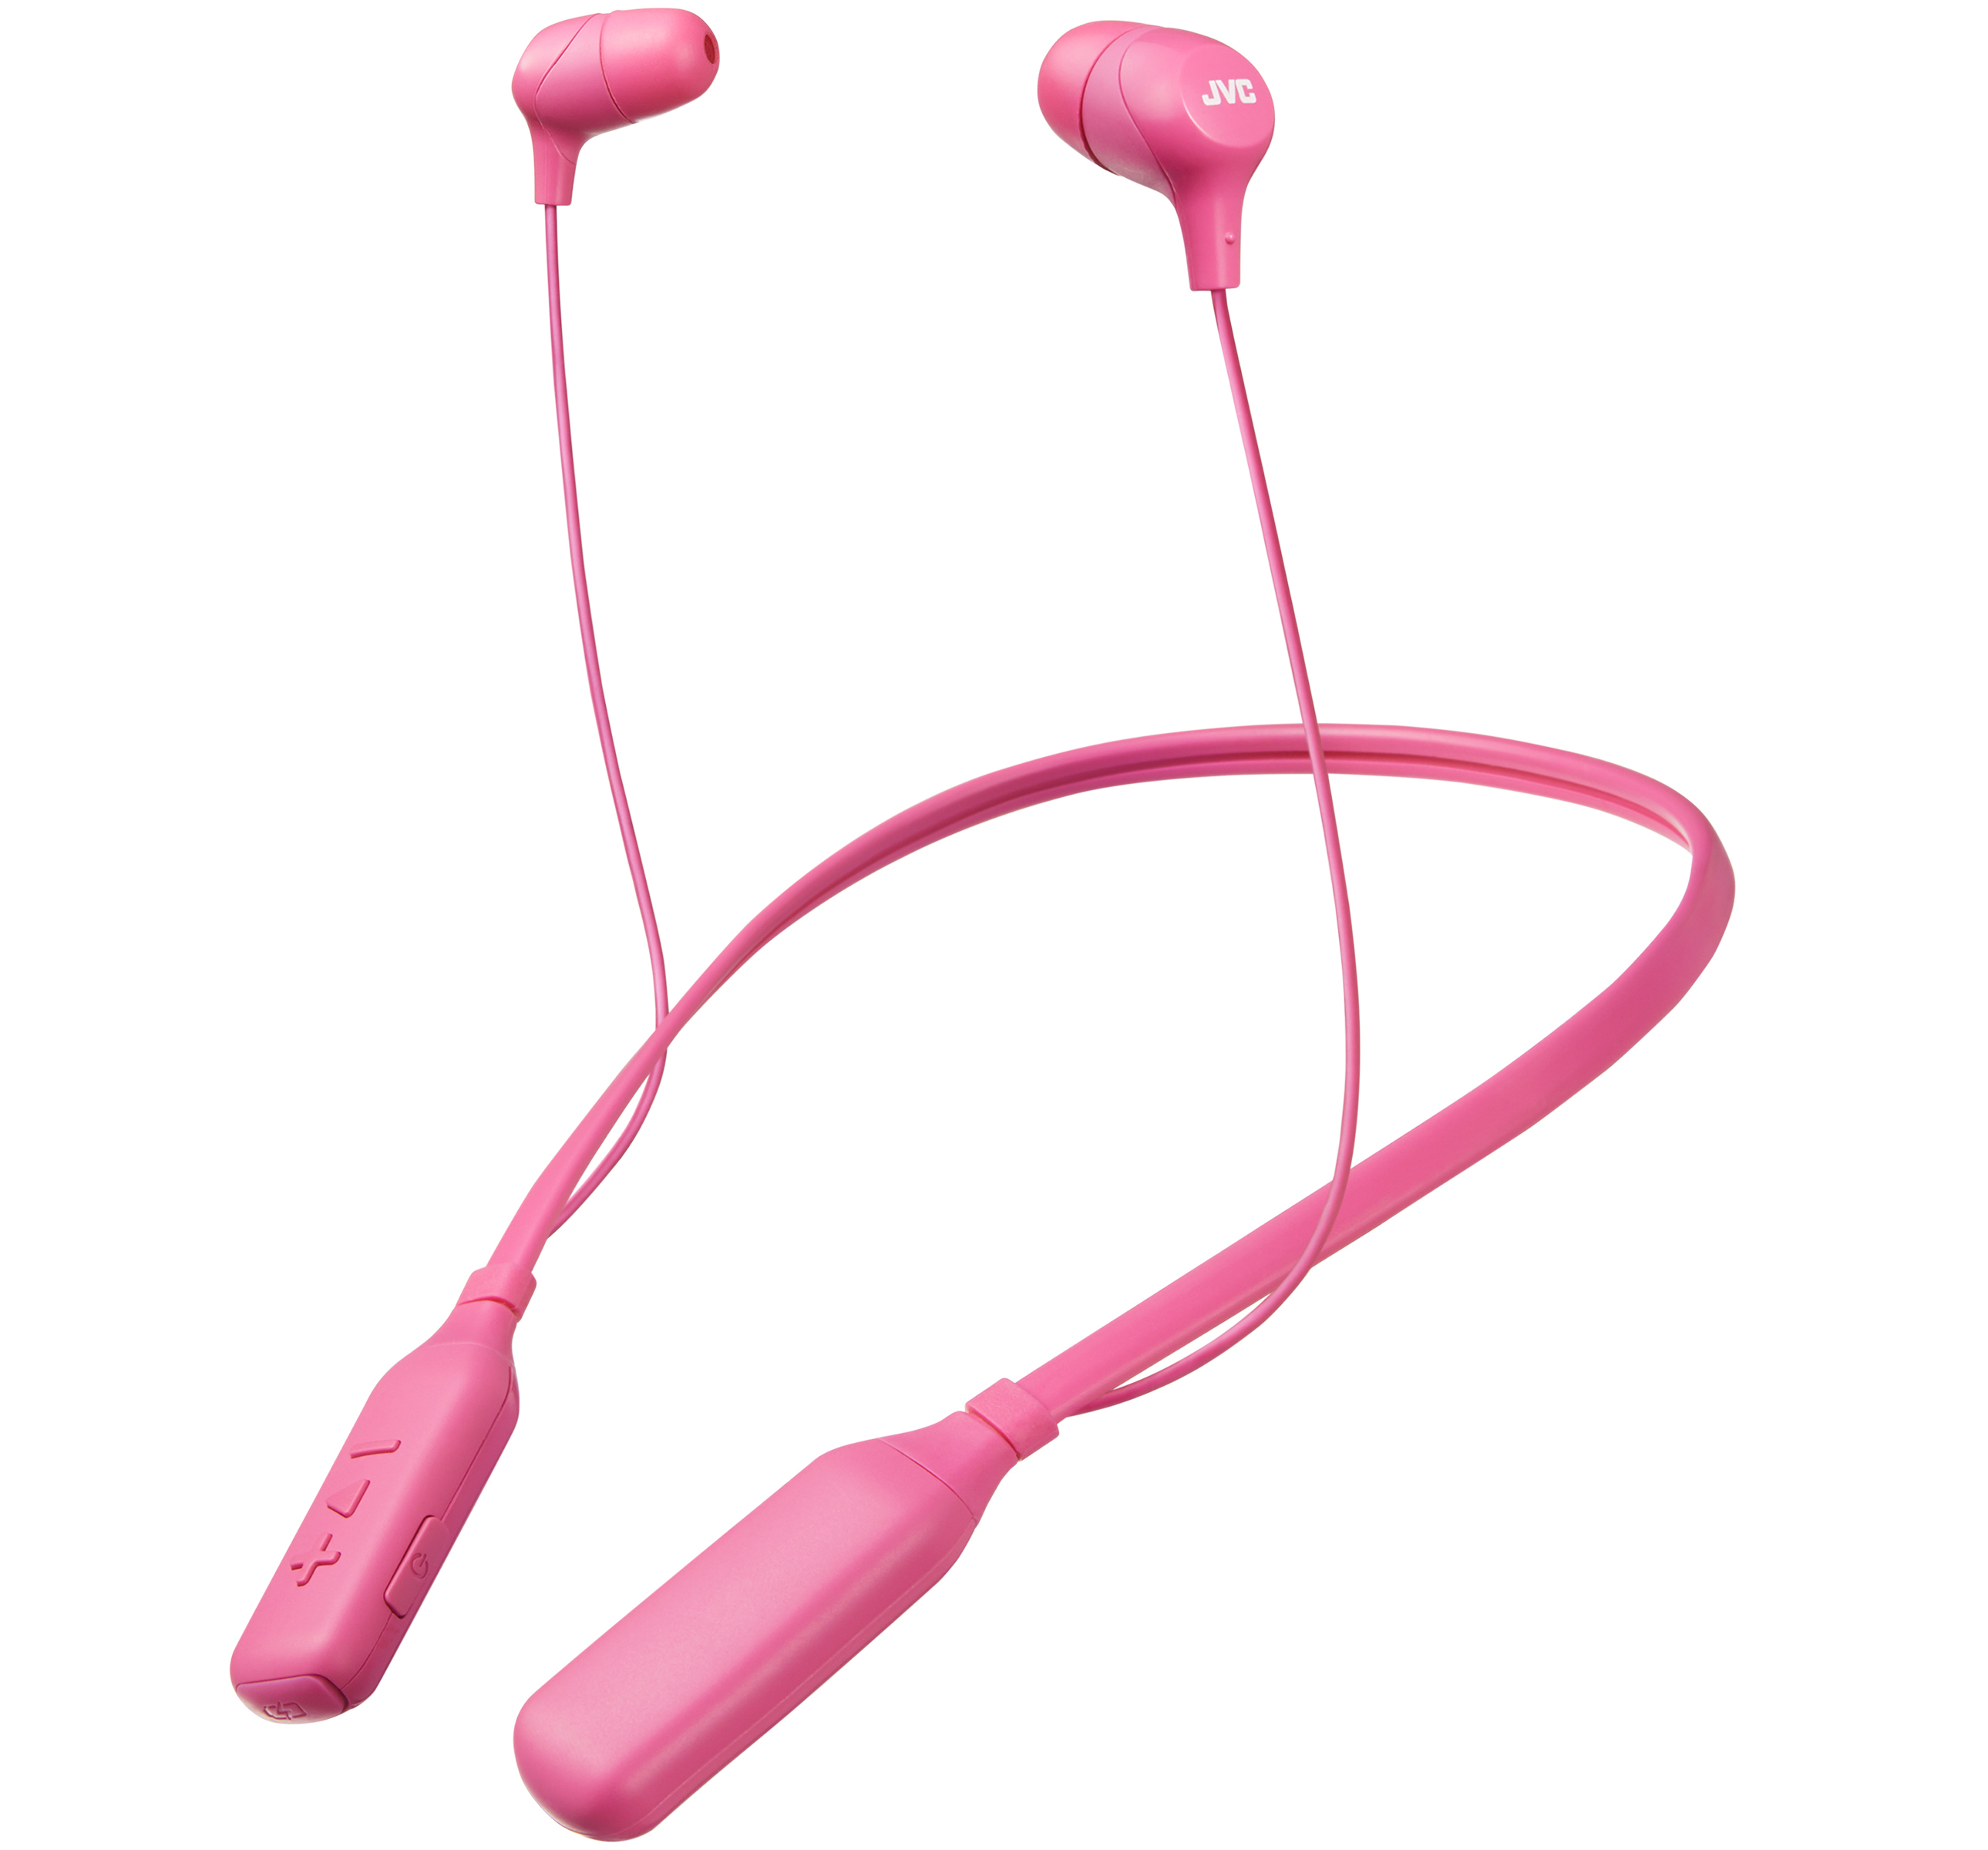 JVC HA-FX39 Marshallow Pink Bluetooth In-Ear Earphones